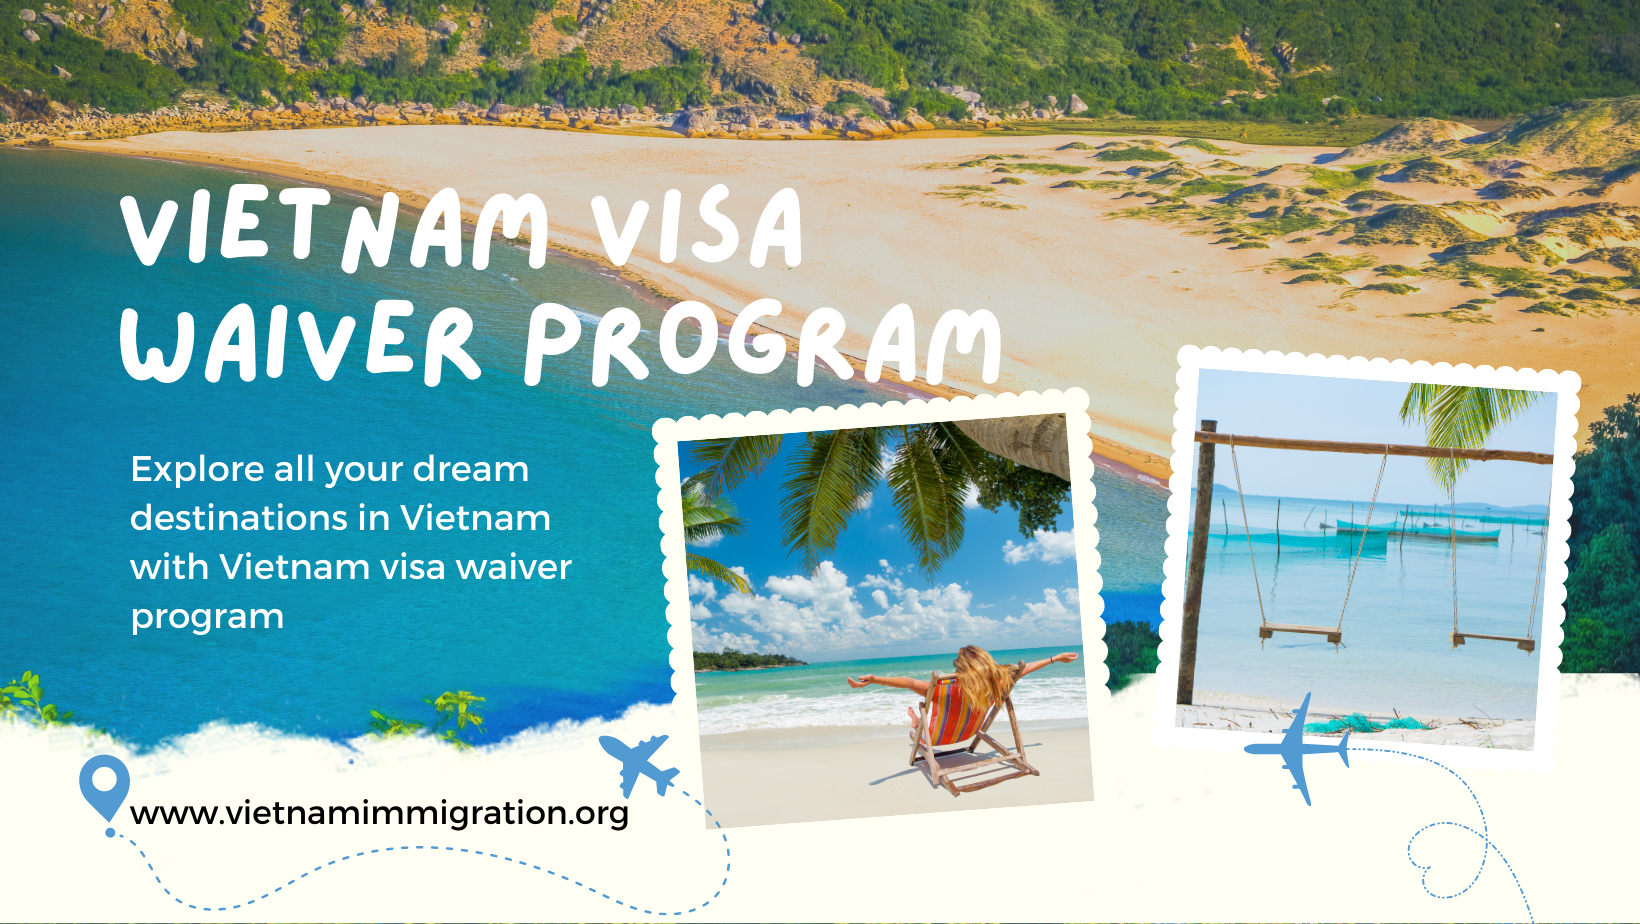 Vietnam visa waiver program